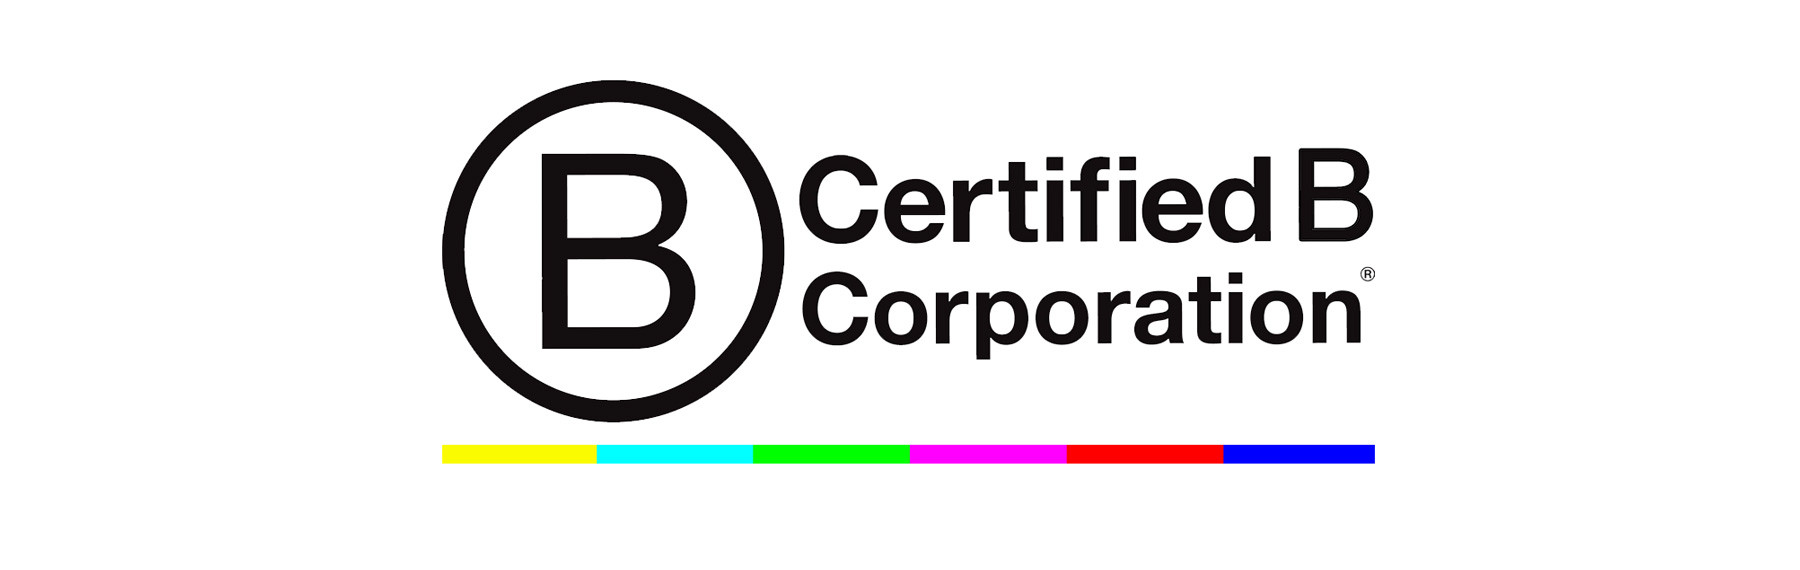 Certified B Corporation Logo 